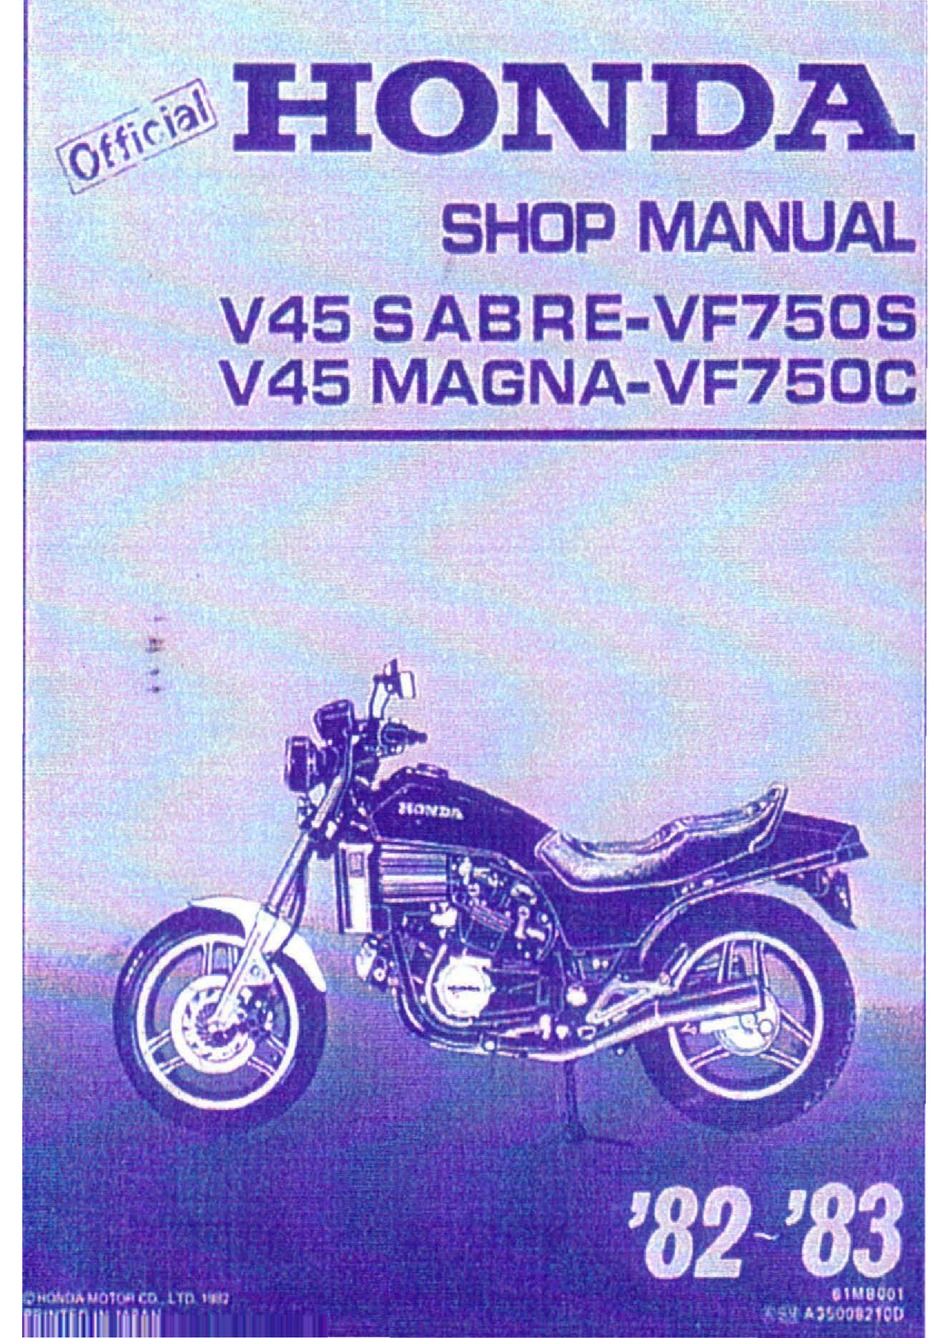 Honda V 45 Sabre Vf750s 1982 Shop Manual Pdf Download Manualslib